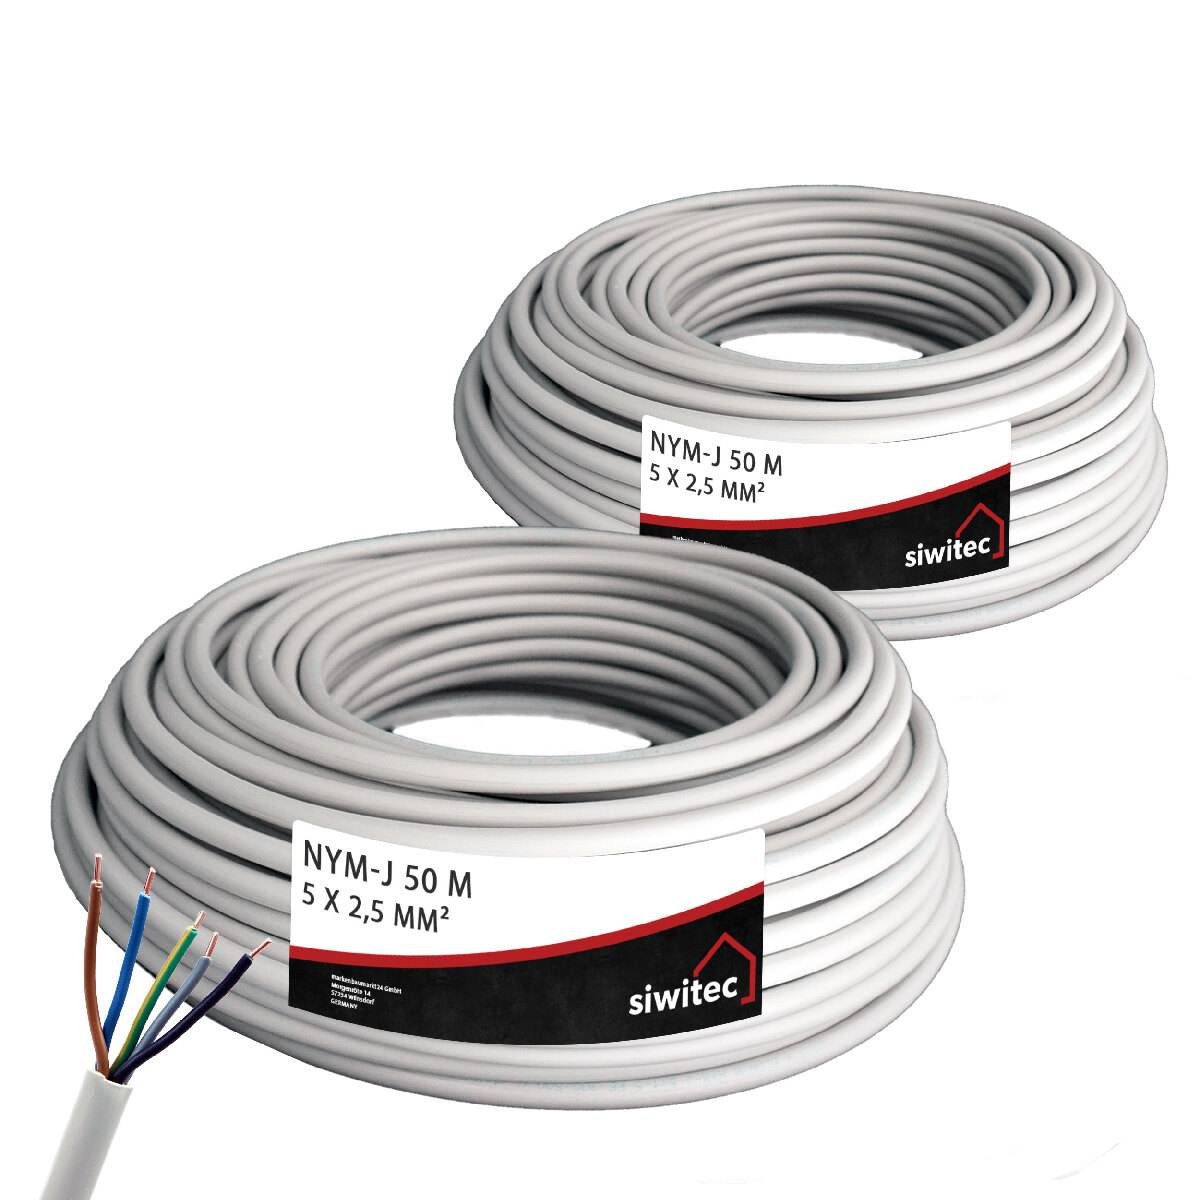 siwitec NYM-Kabel, 3x1,5, 3x2,5, 5x1,5, 5x2,5, 50m, 100m (2x50m Ring) Stromkabel, NYY-Kabel, (10000 cm), Universell einsetzbar, 5-adrig, Polyvinylchlorid, Made in Germany